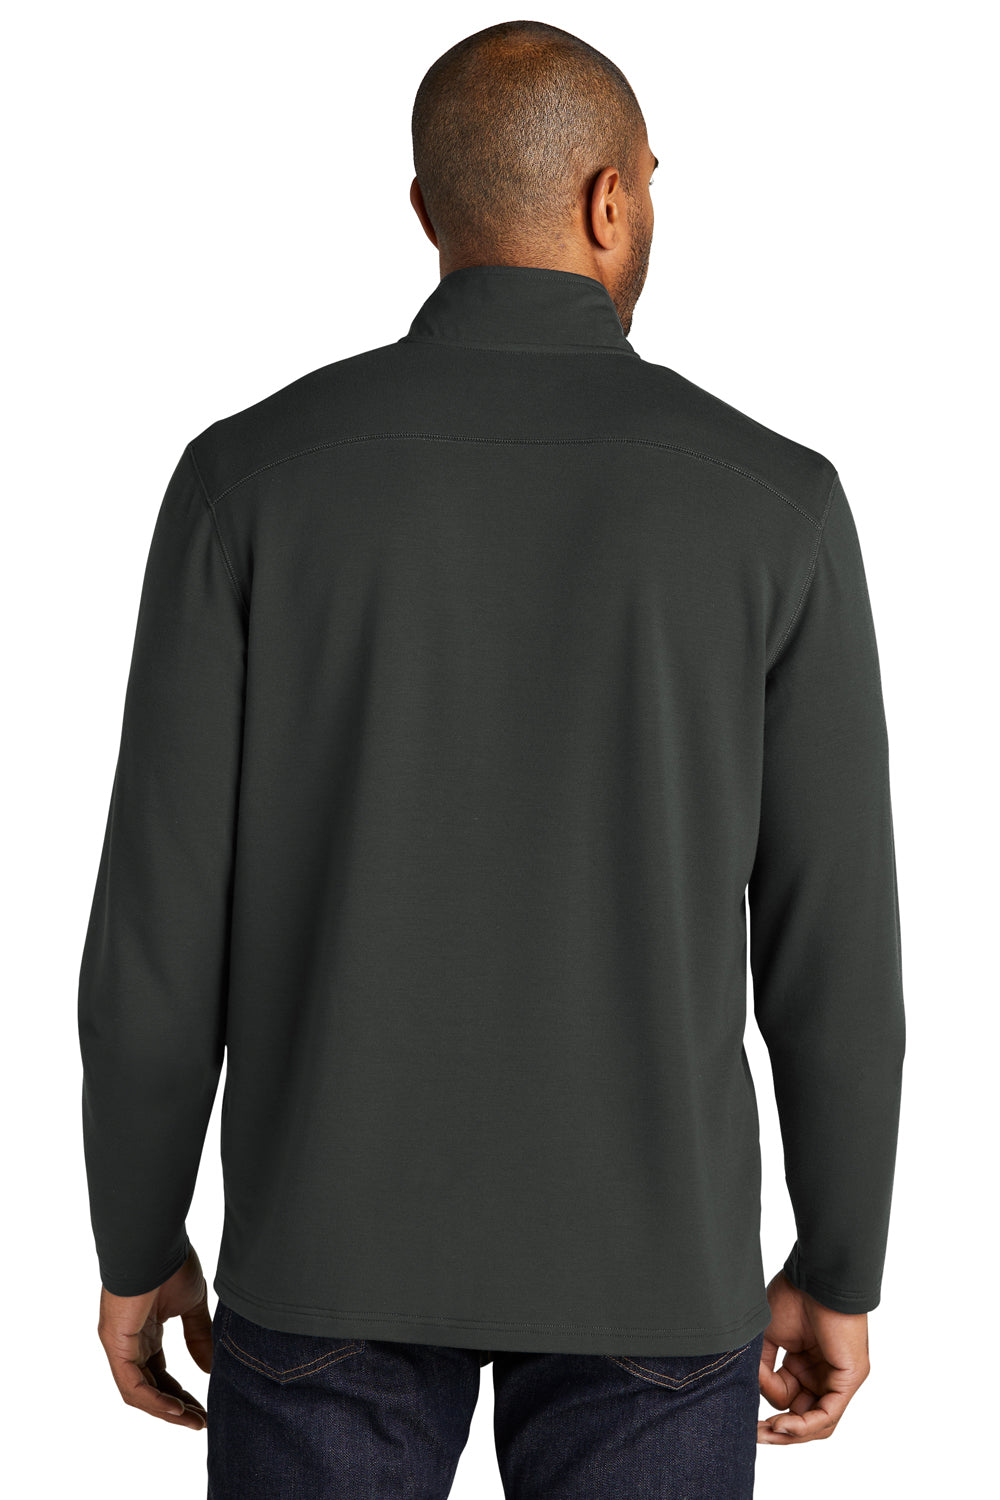 Port Authority K825 Microterry 1/4 Zip Sweatshirt Charcoal Grey Back